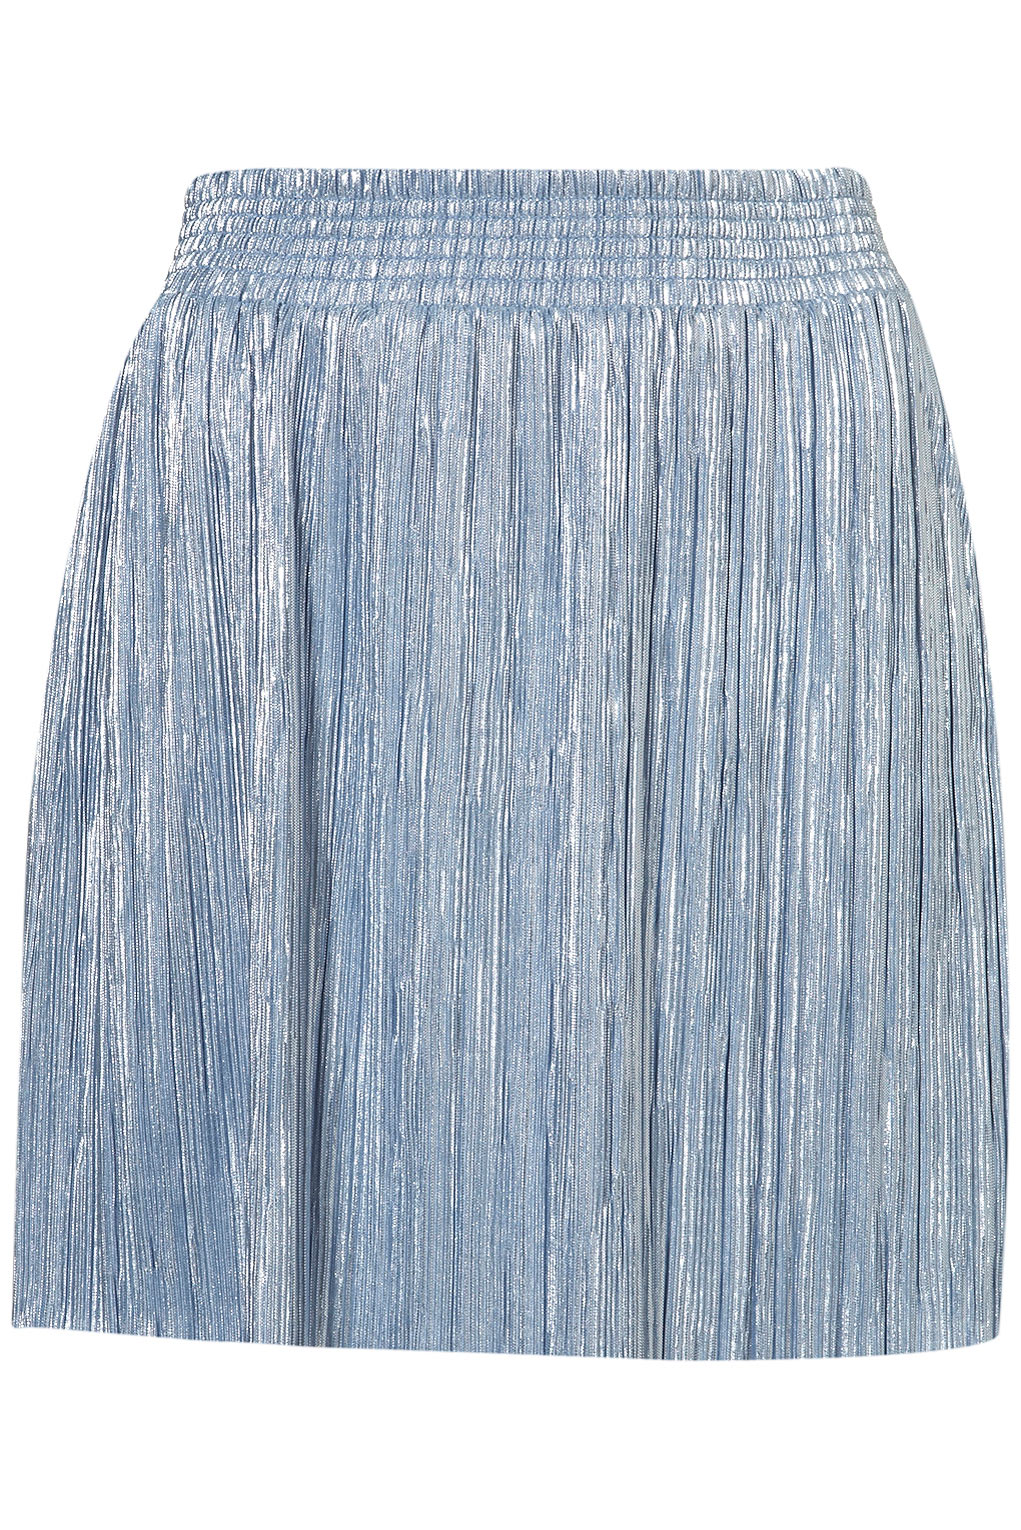 Lyst - Topshop Short Metallic Pleat Skirt in Blue